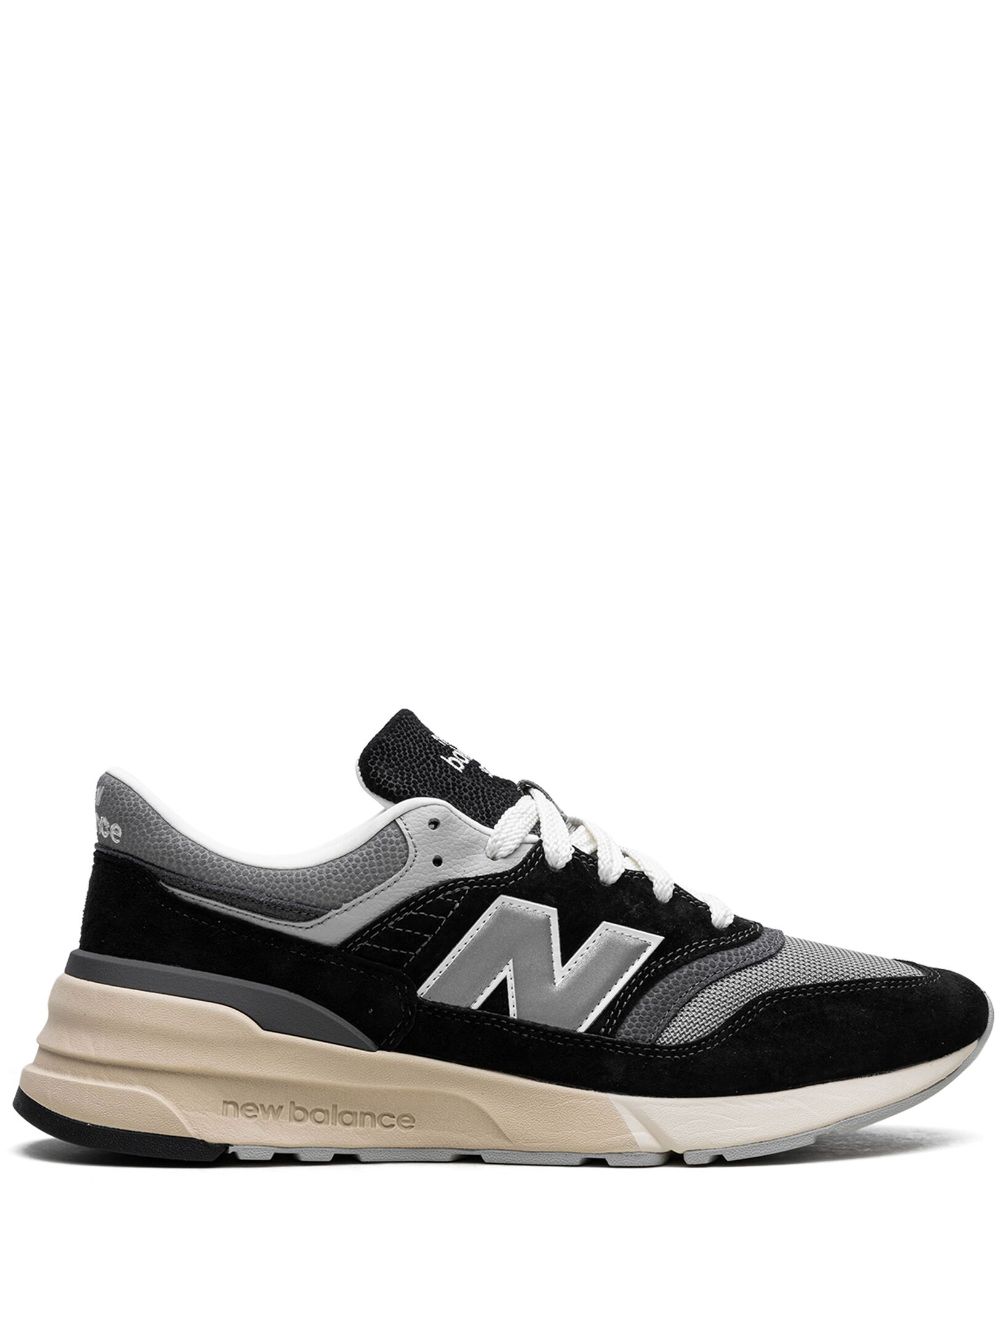 New Balance 997R "Black/Grey" sneakers